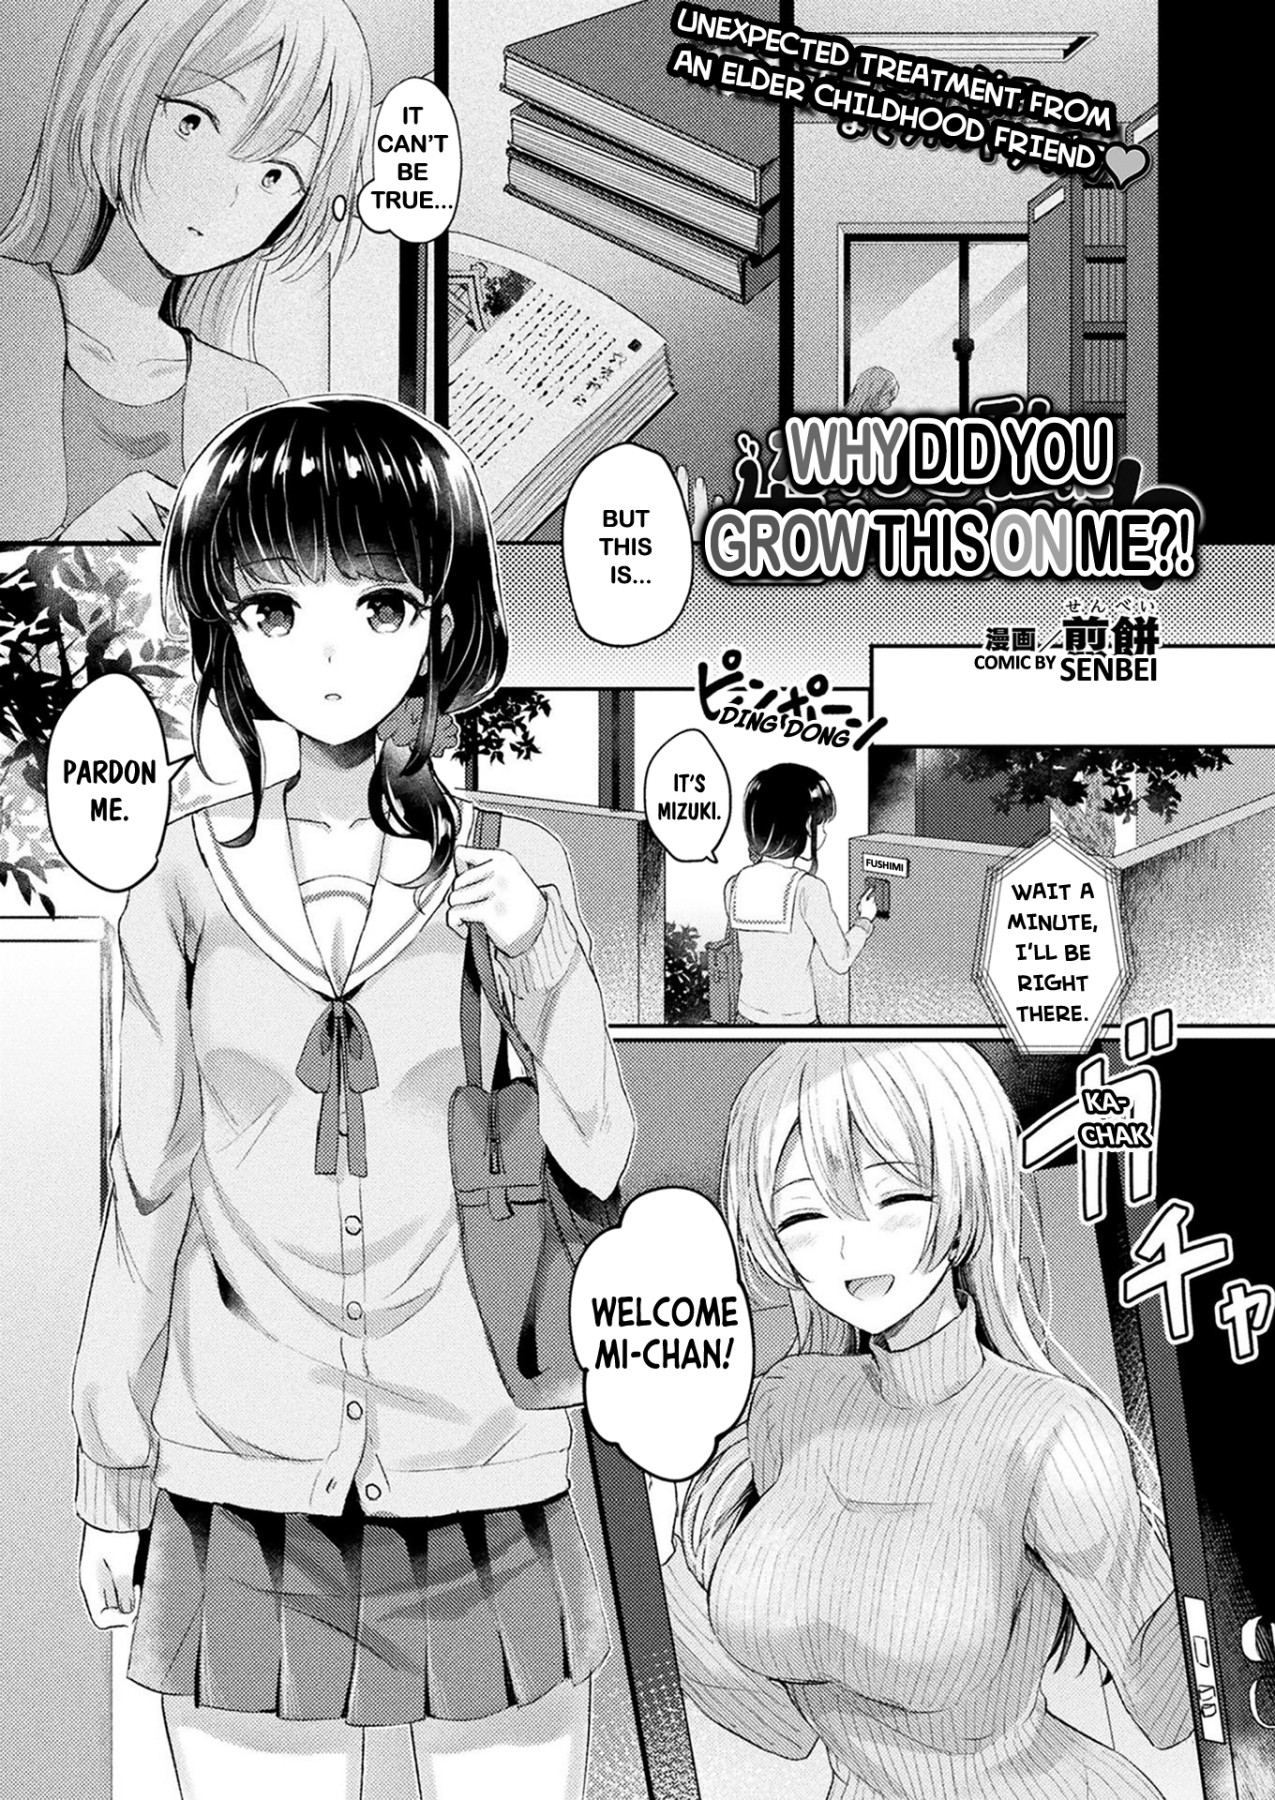 Hentai Manga Comic-Why Did You Grow This On Me!?-Read-1